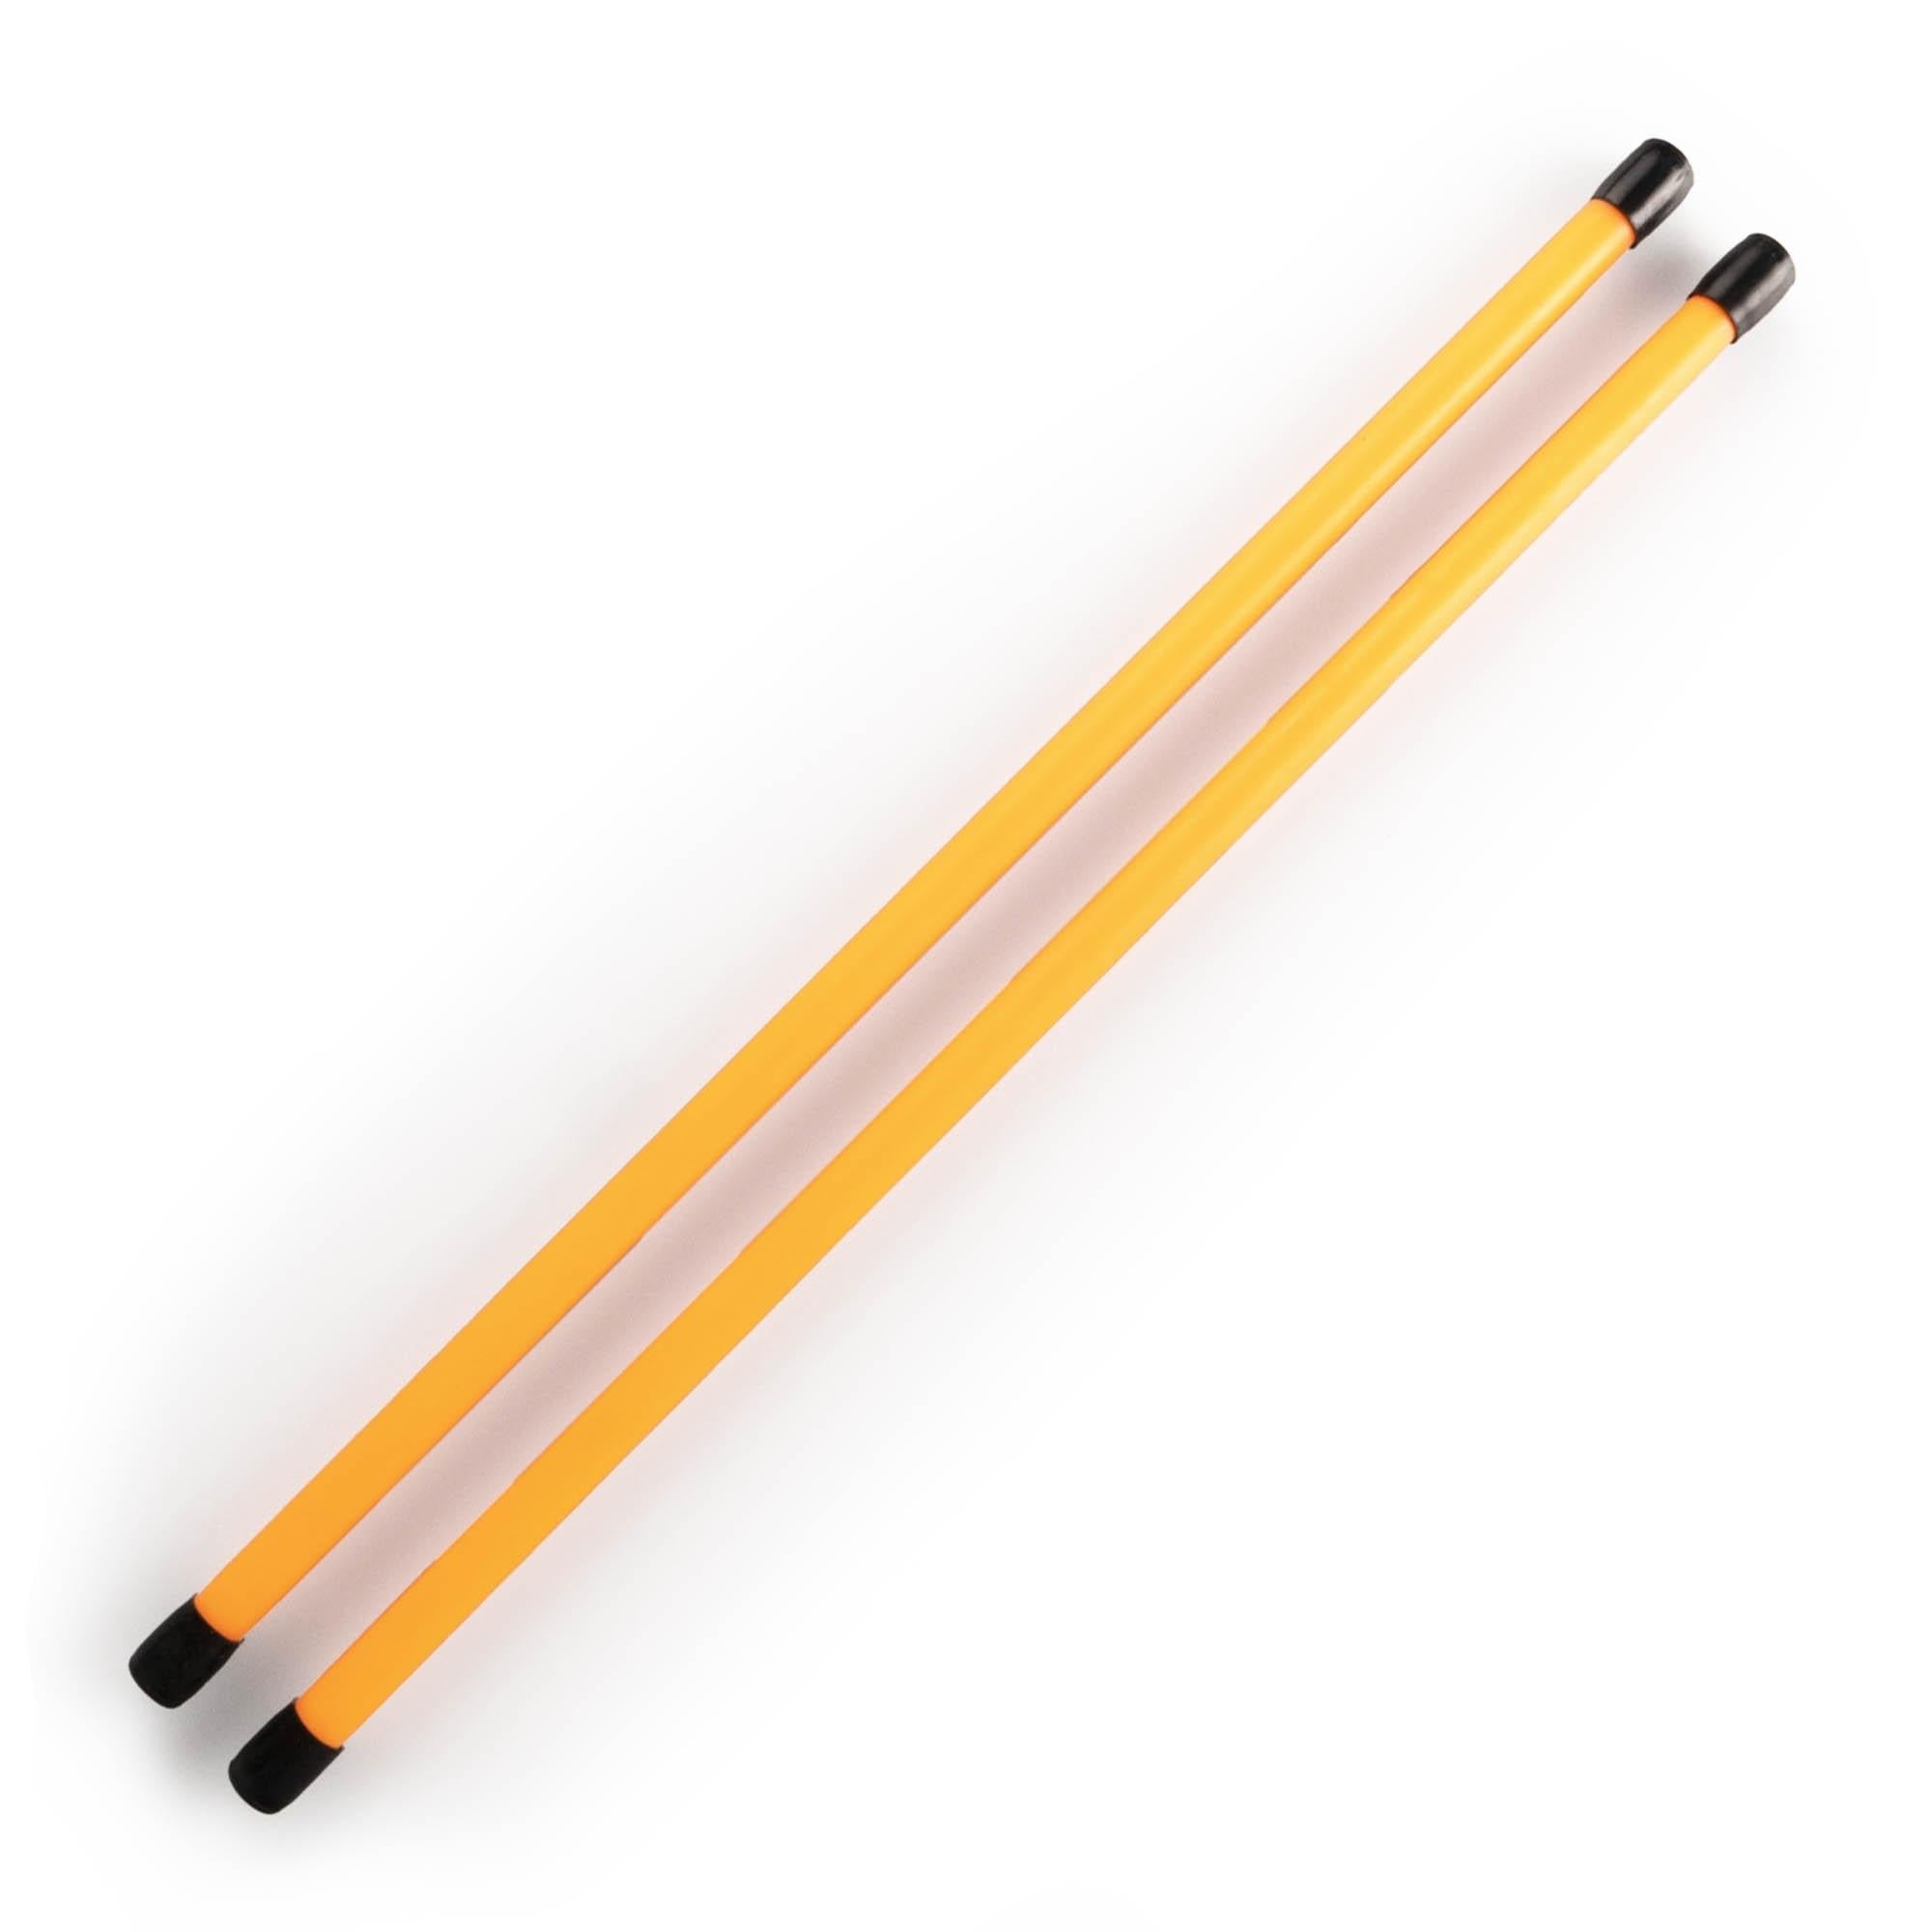 A pair of orange devilstick handsticks with black caps on each end